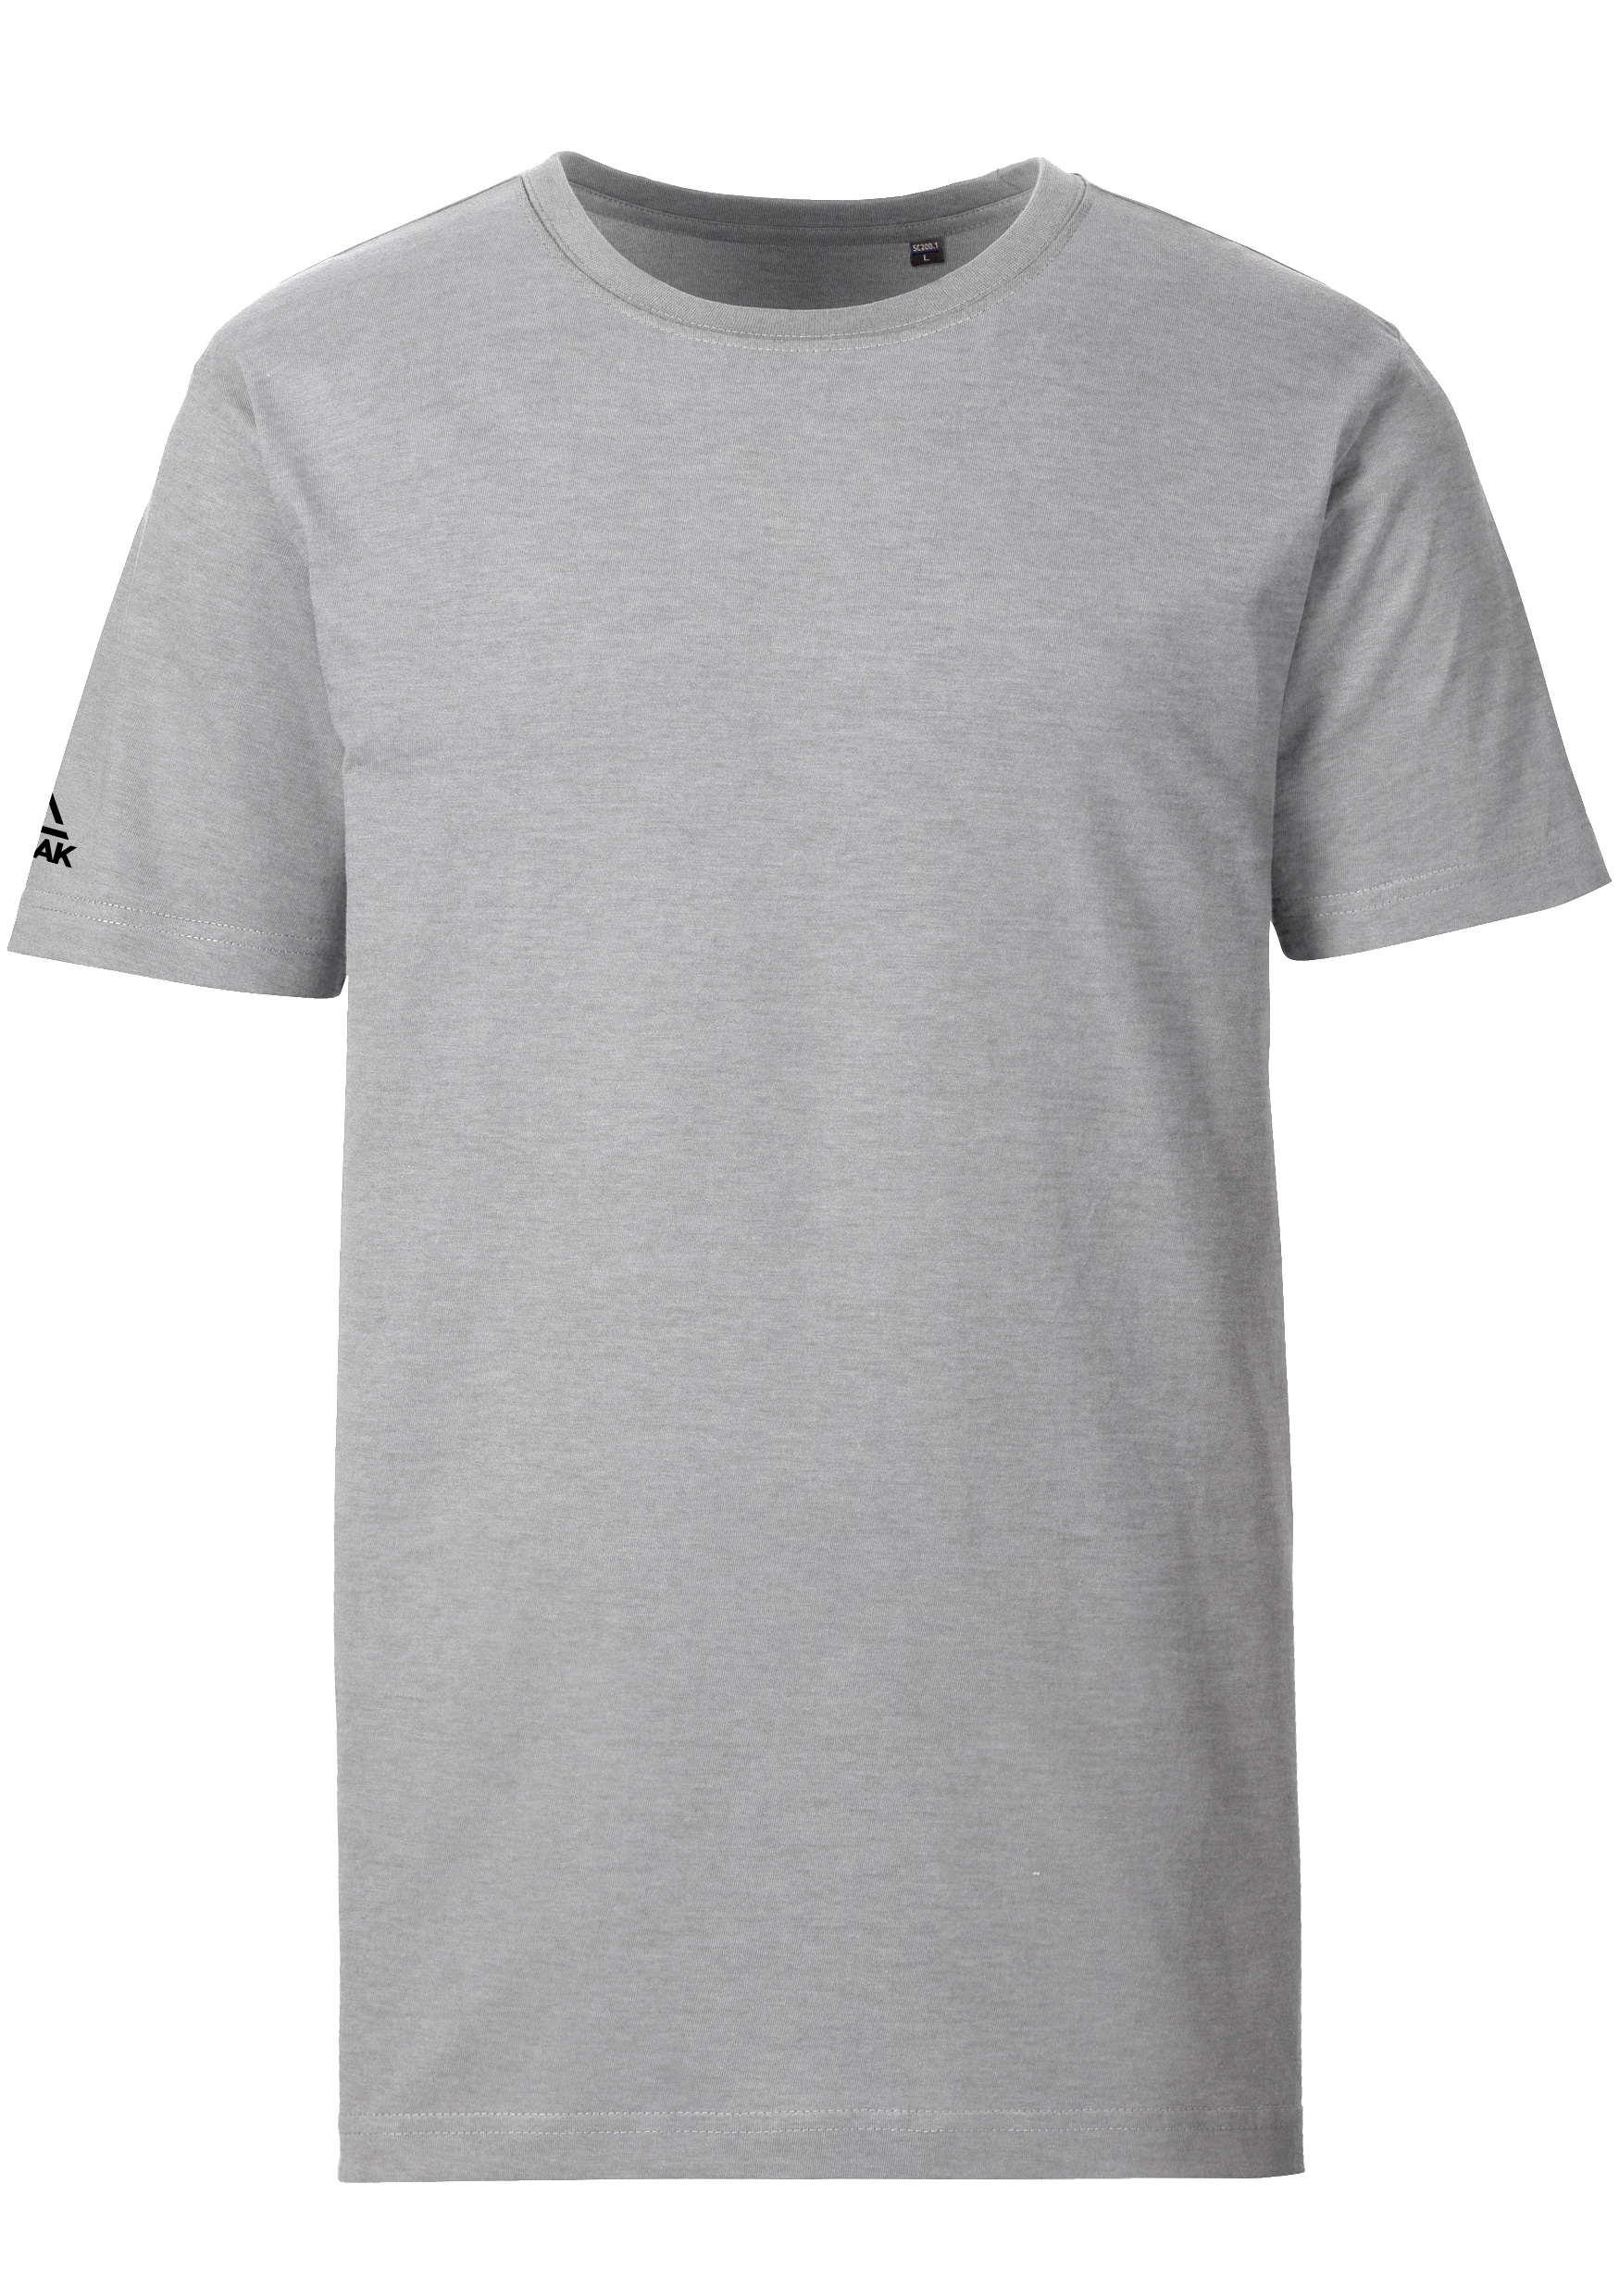 PEAK T Shirt Logo Schulter